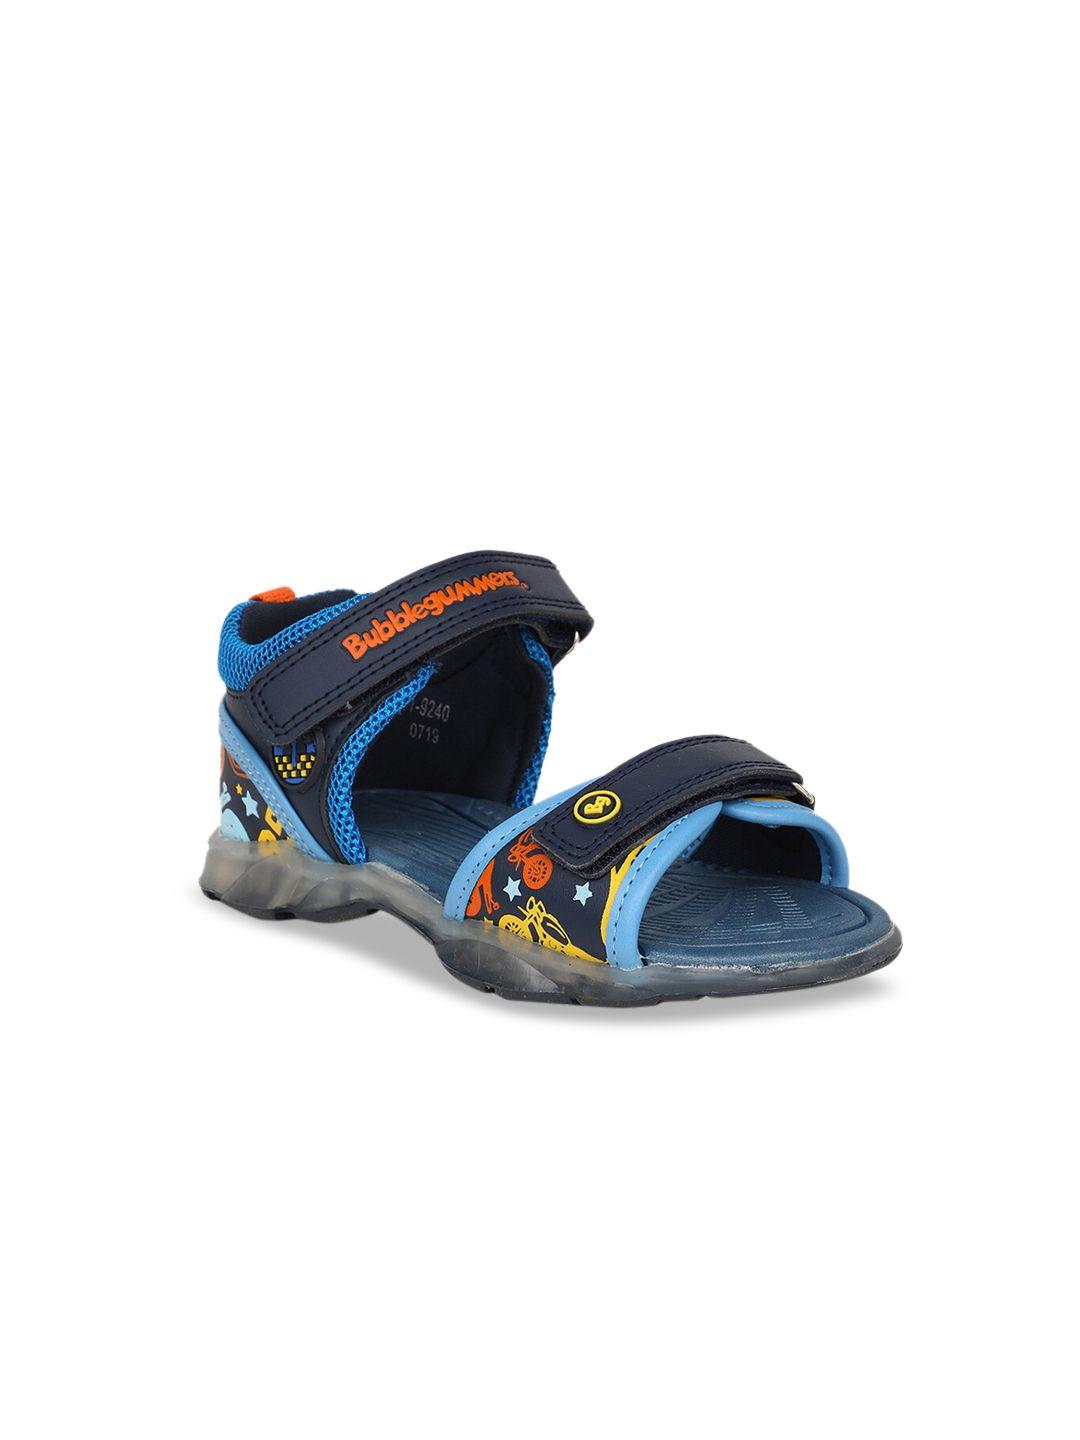 bubblegummers boys blue sandals